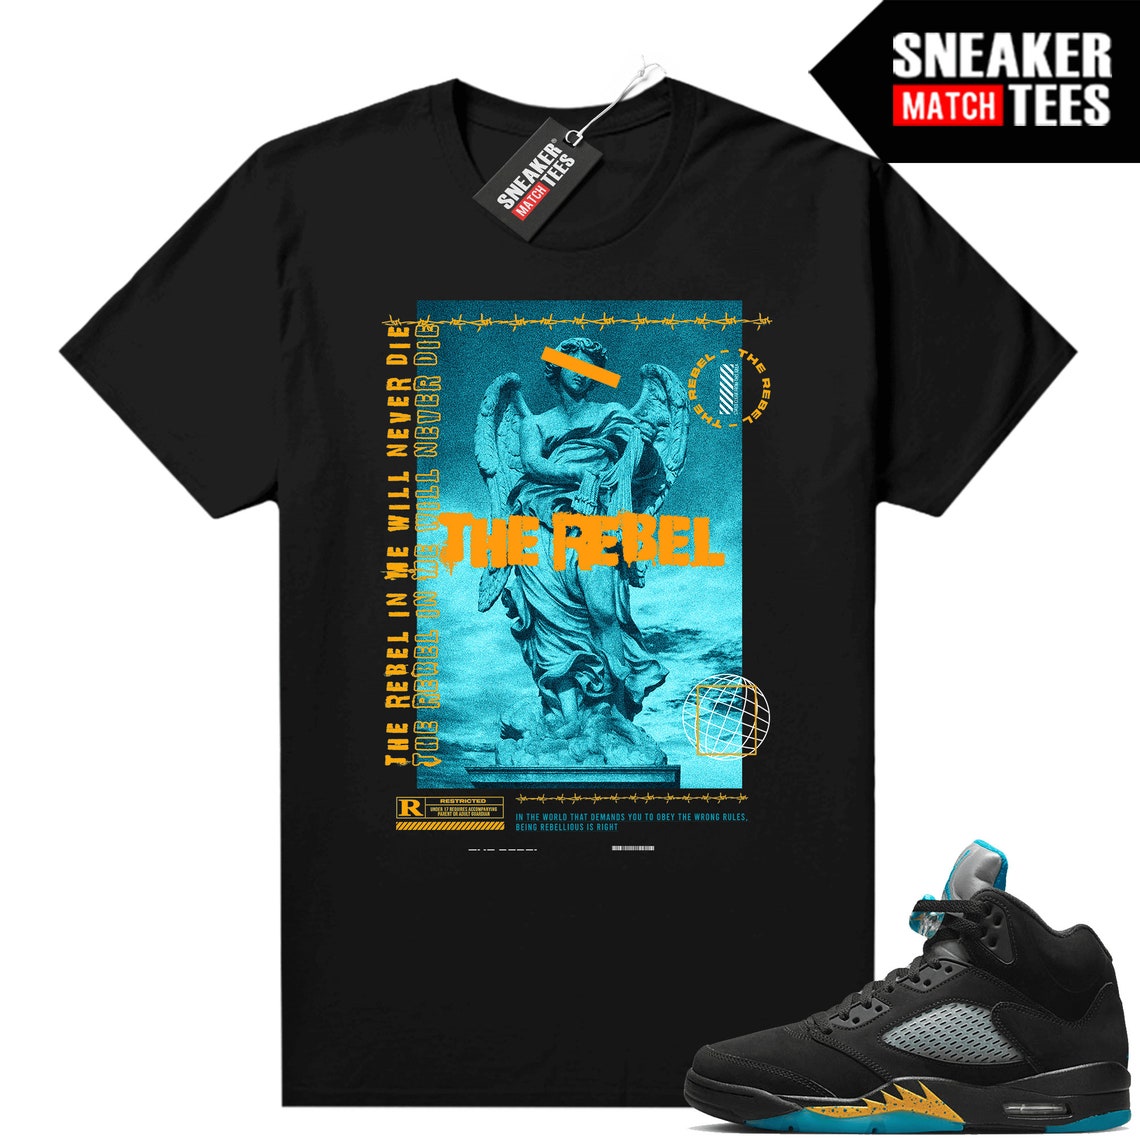 Aqua 5s Shirts to Match Sneaker Match Tees Black the - Etsy